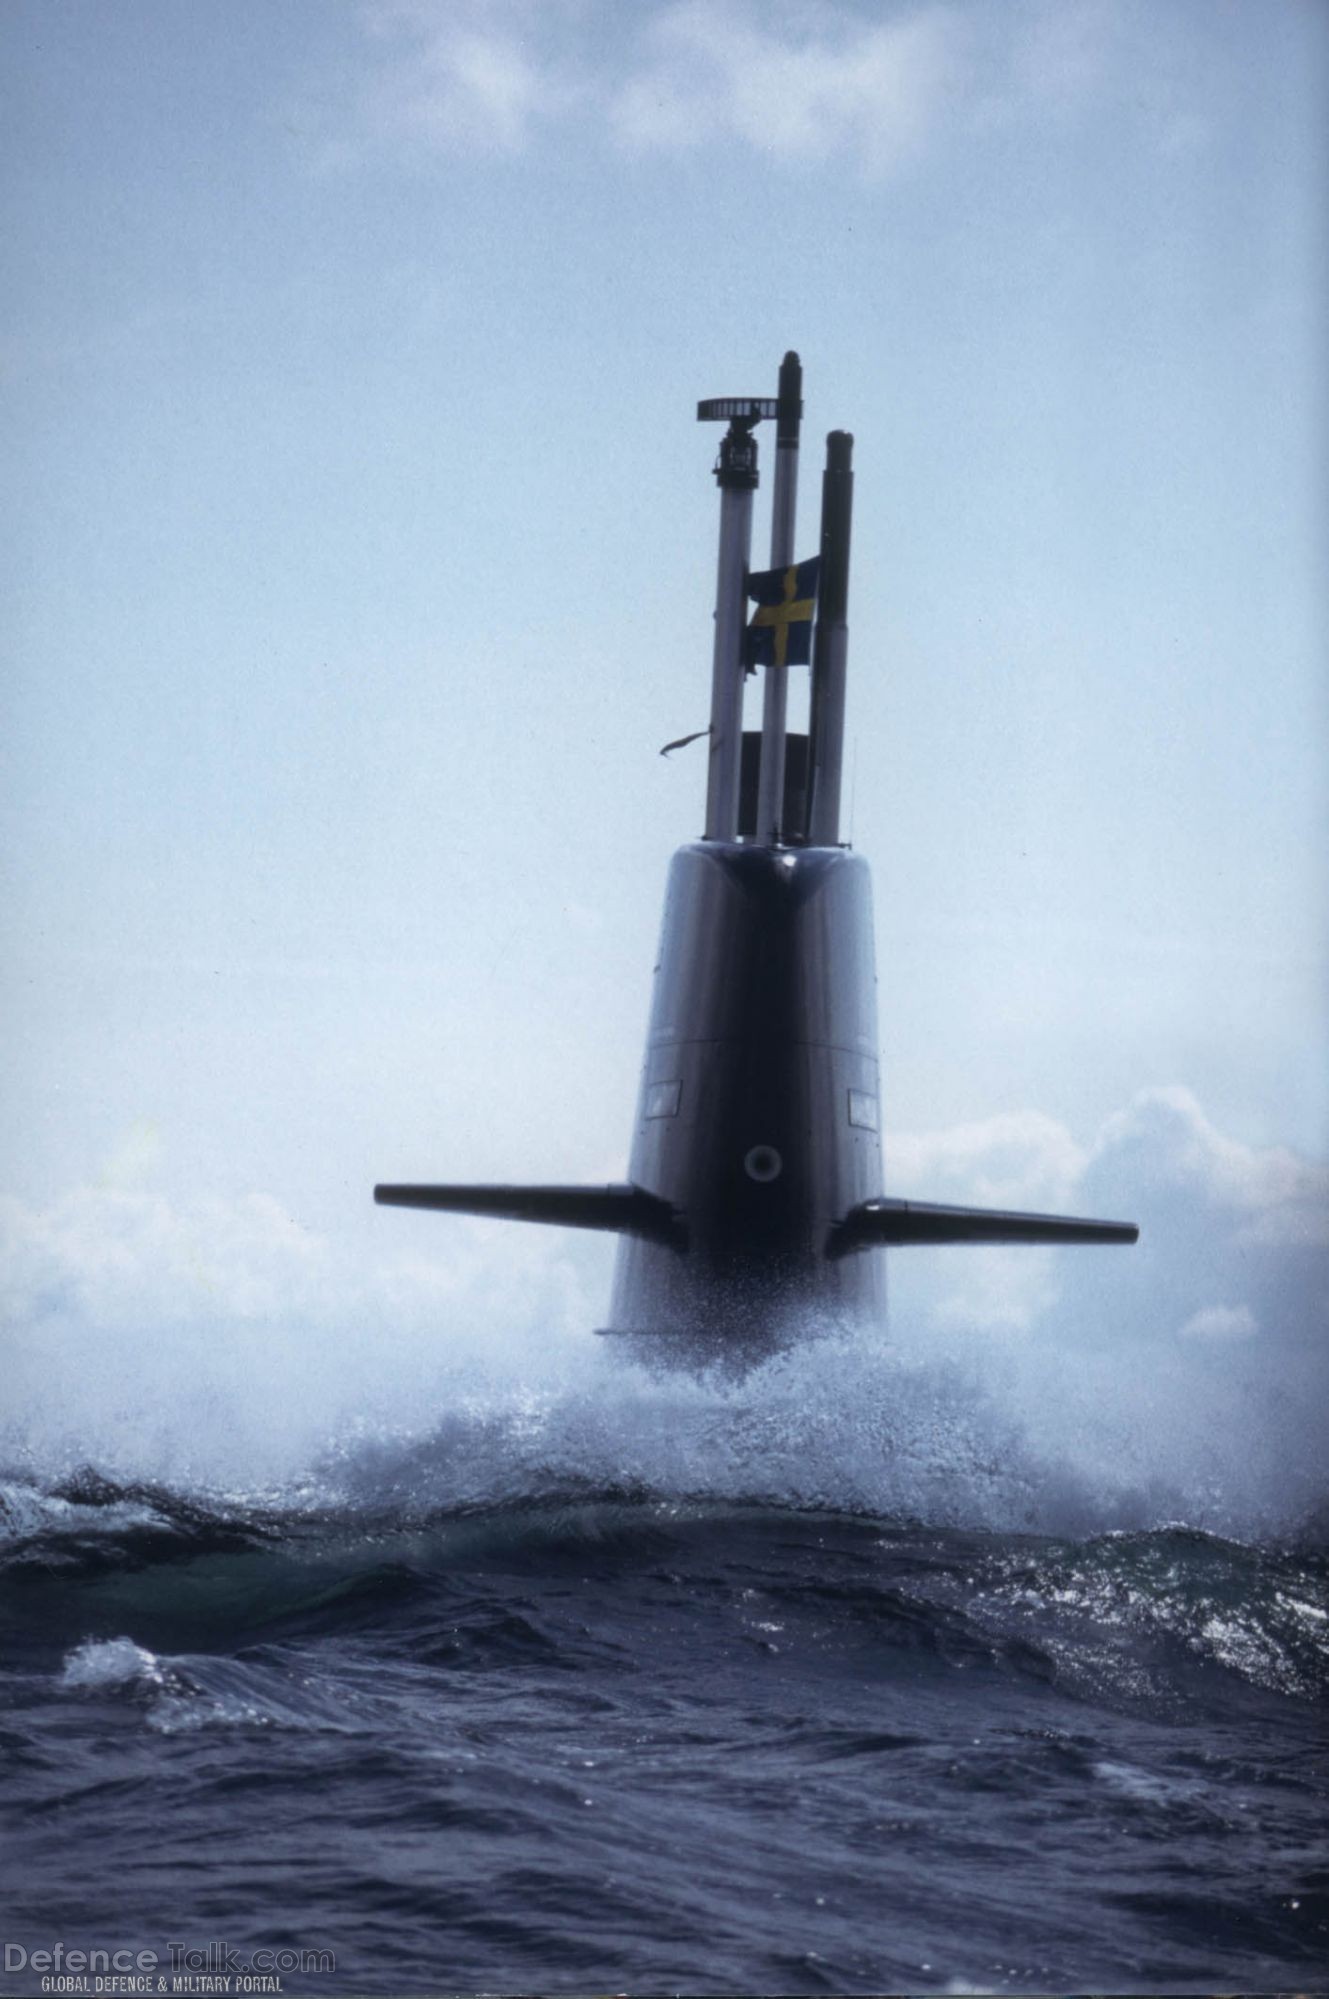 Gotland class submarine - SwN